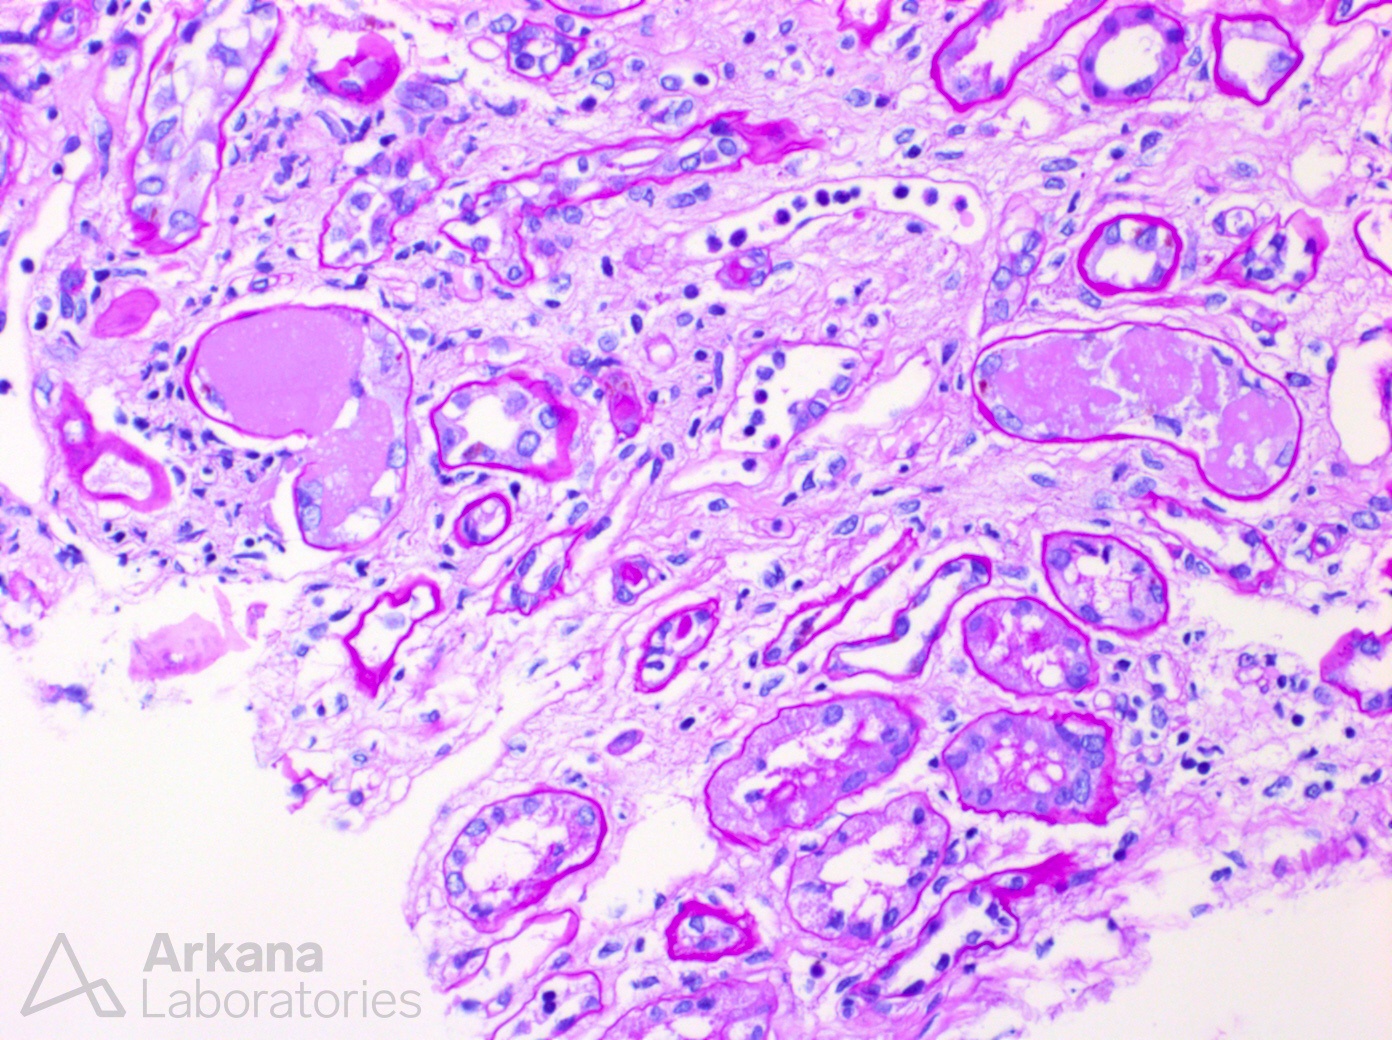 PAS negative intratubular casts in renal biopsy at Arkana Laboratories